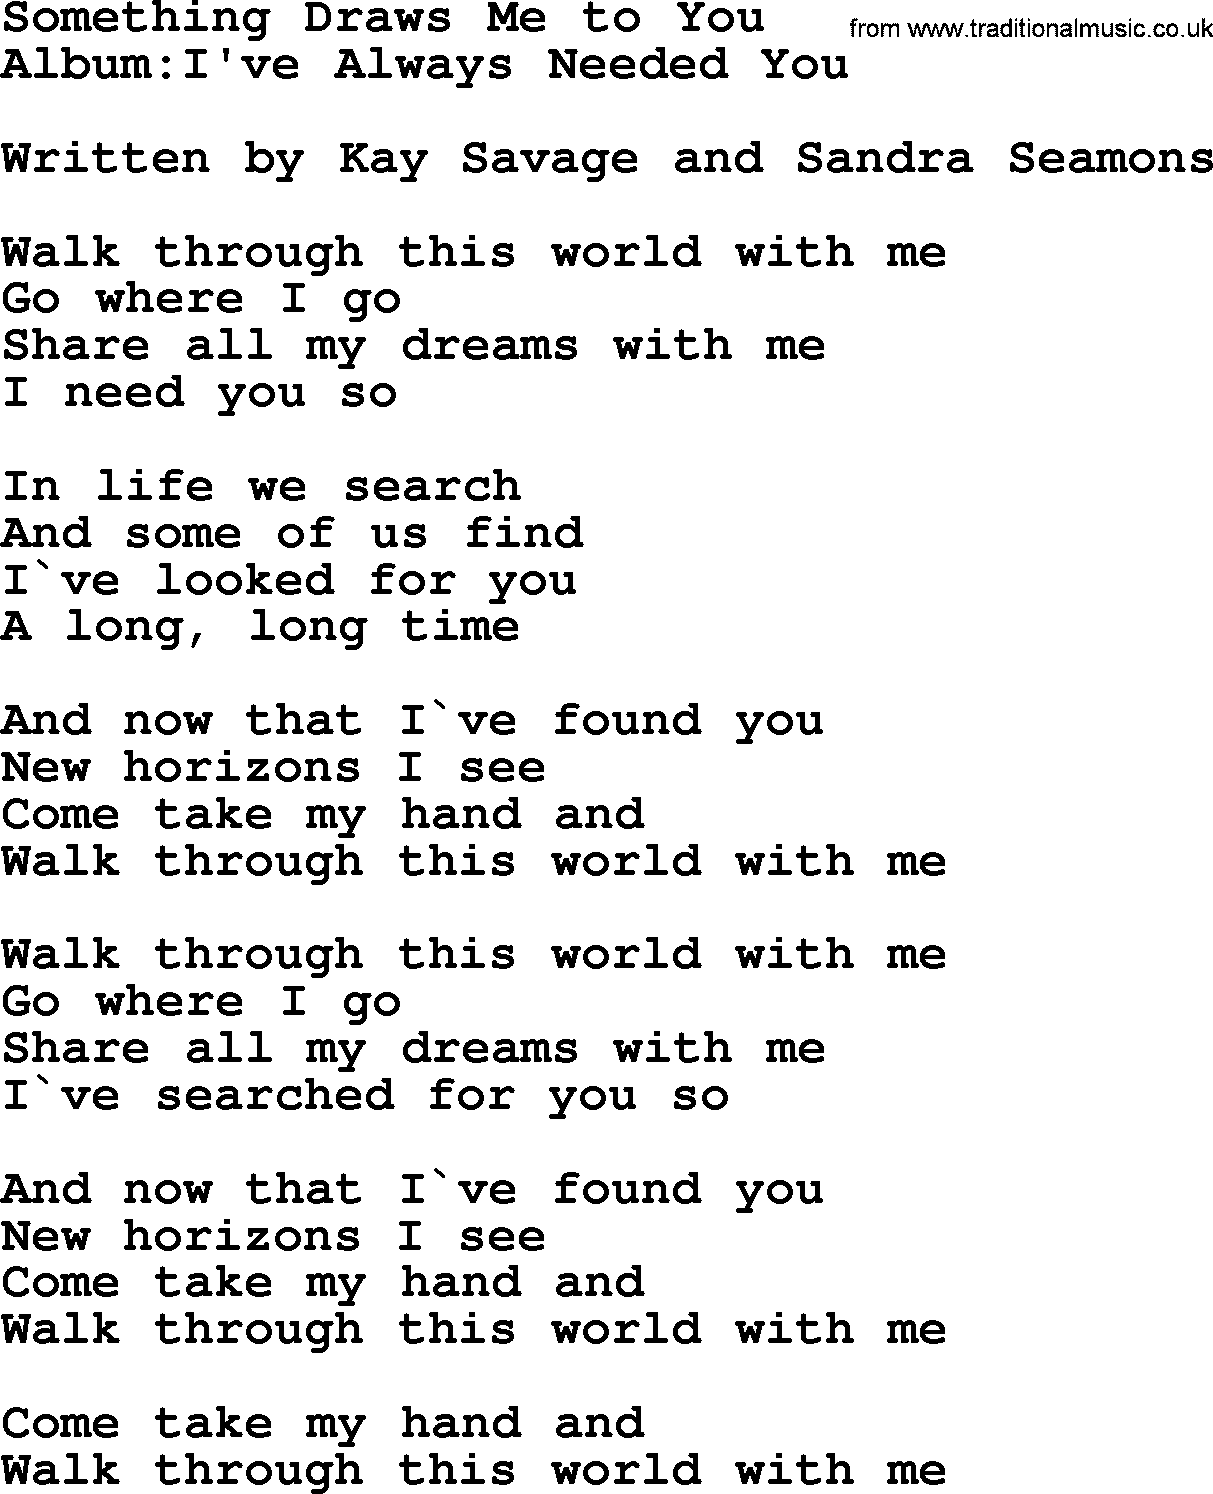 Emmylou Harris song: Something Draws Me to You lyrics